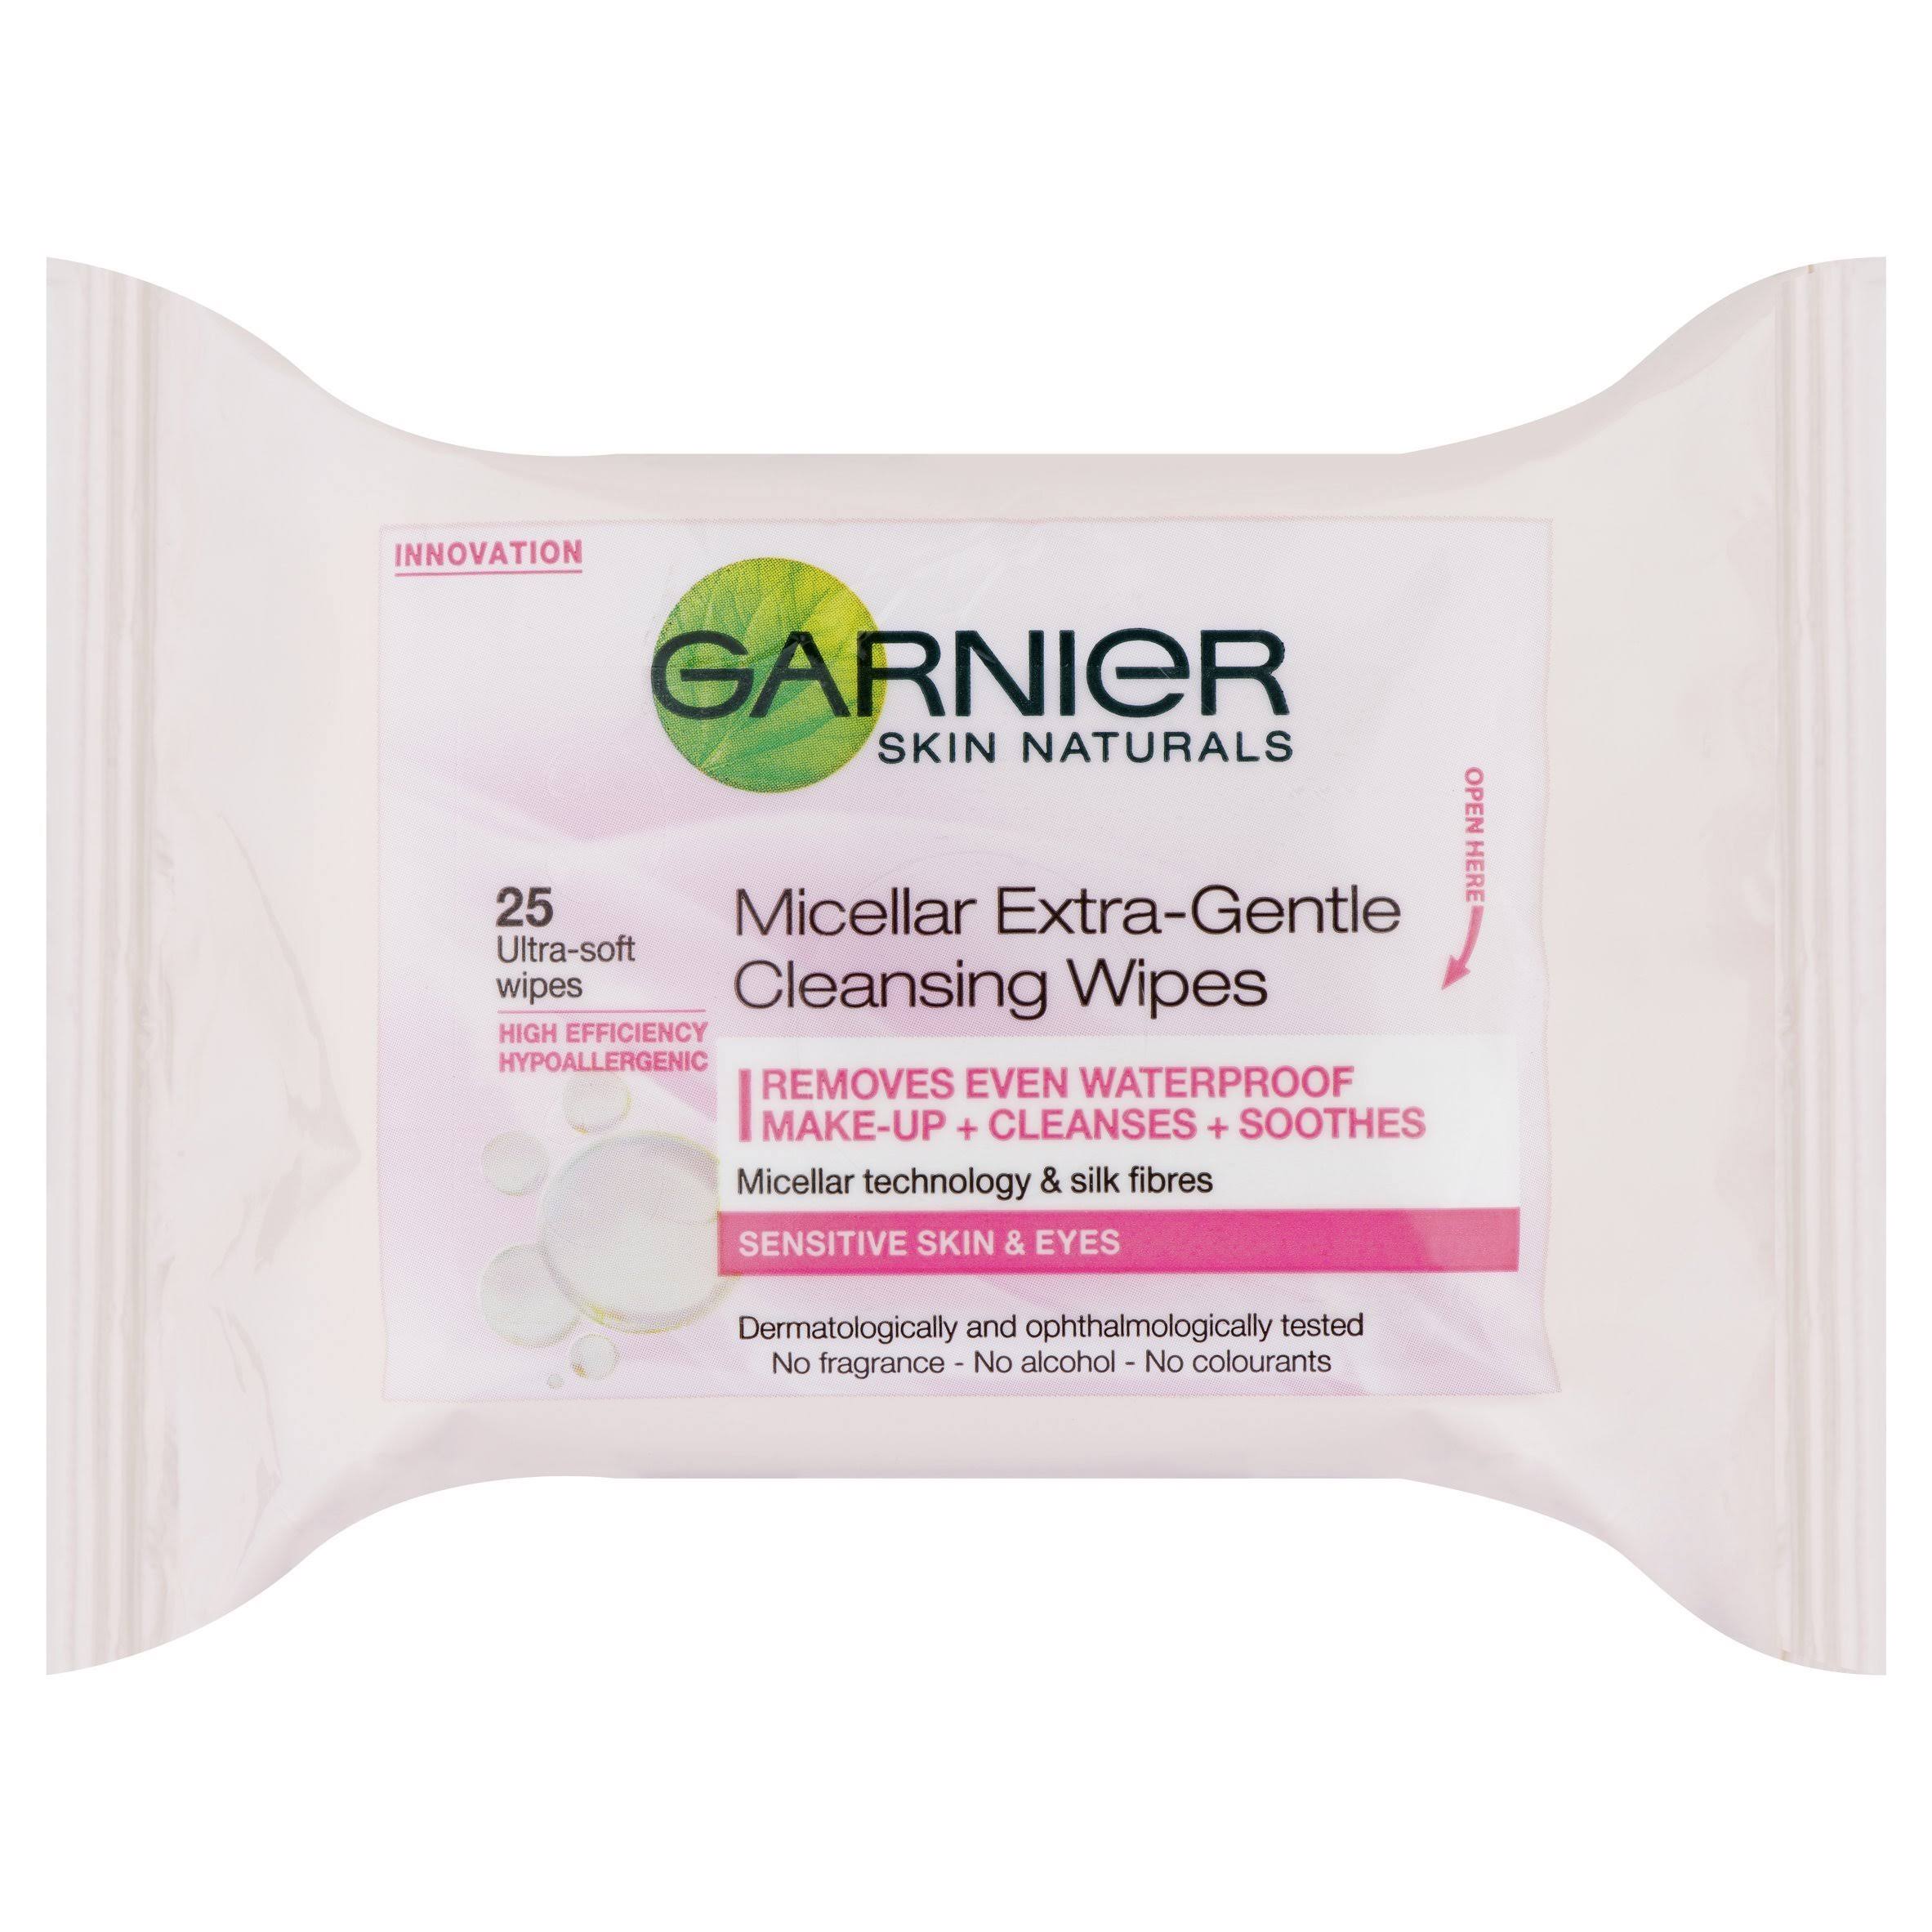 Garnier Micellar Extra Gentle Cleansing Wipes - 25ct